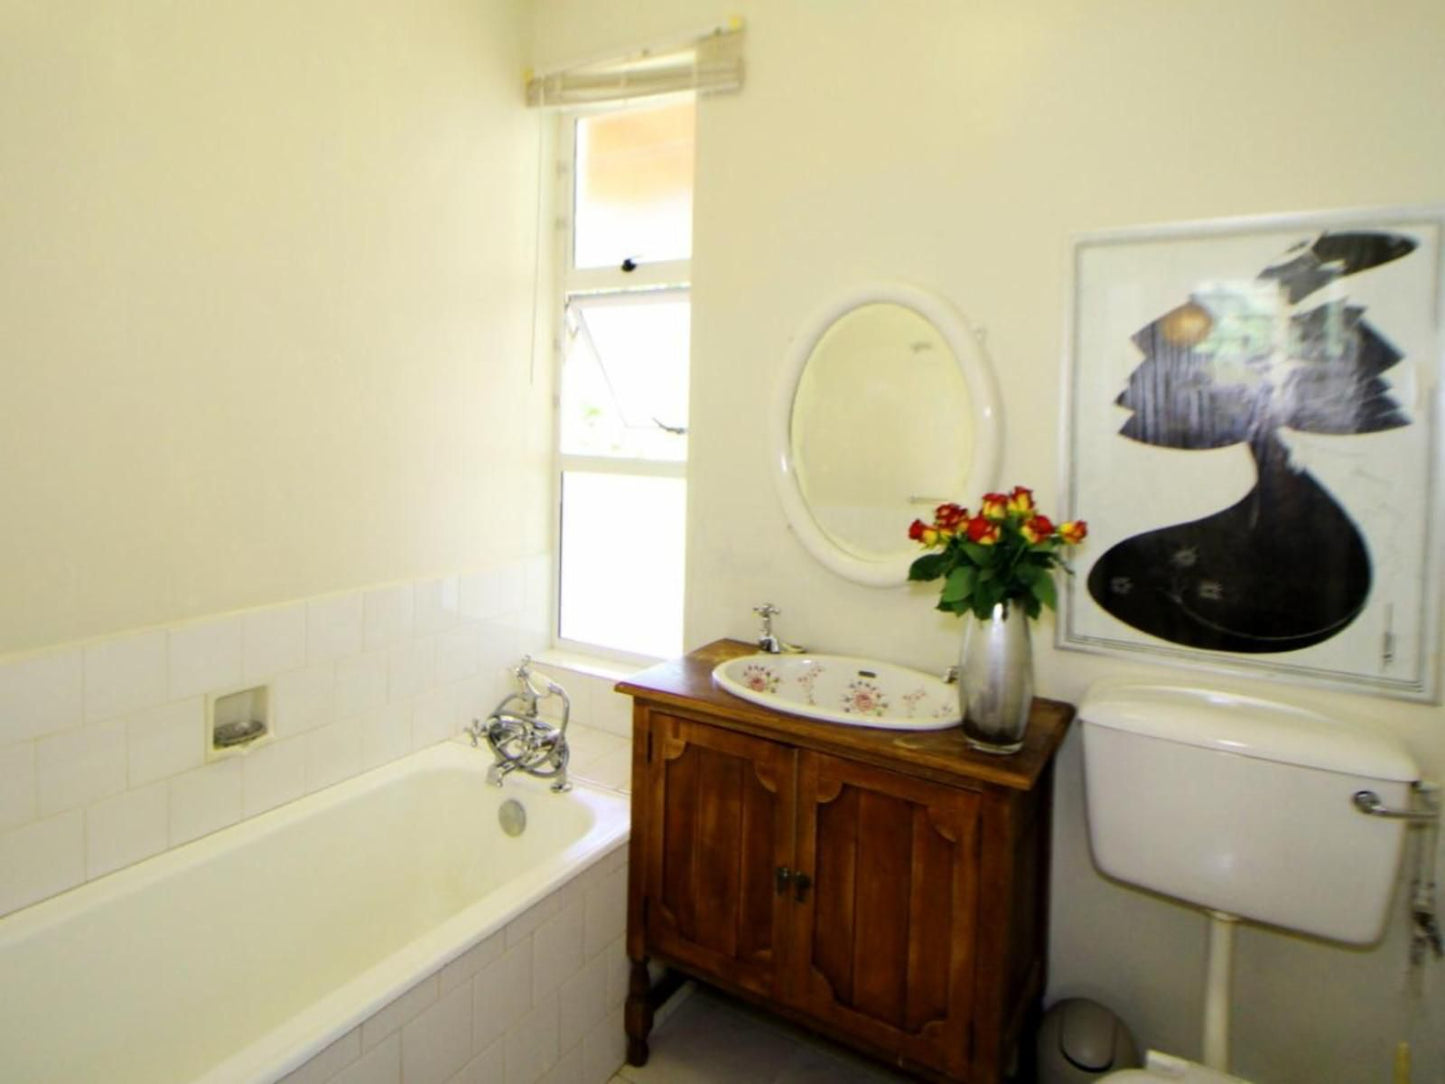 8 Breach Street Plett Central Plettenberg Bay Western Cape South Africa Sepia Tones, Bathroom